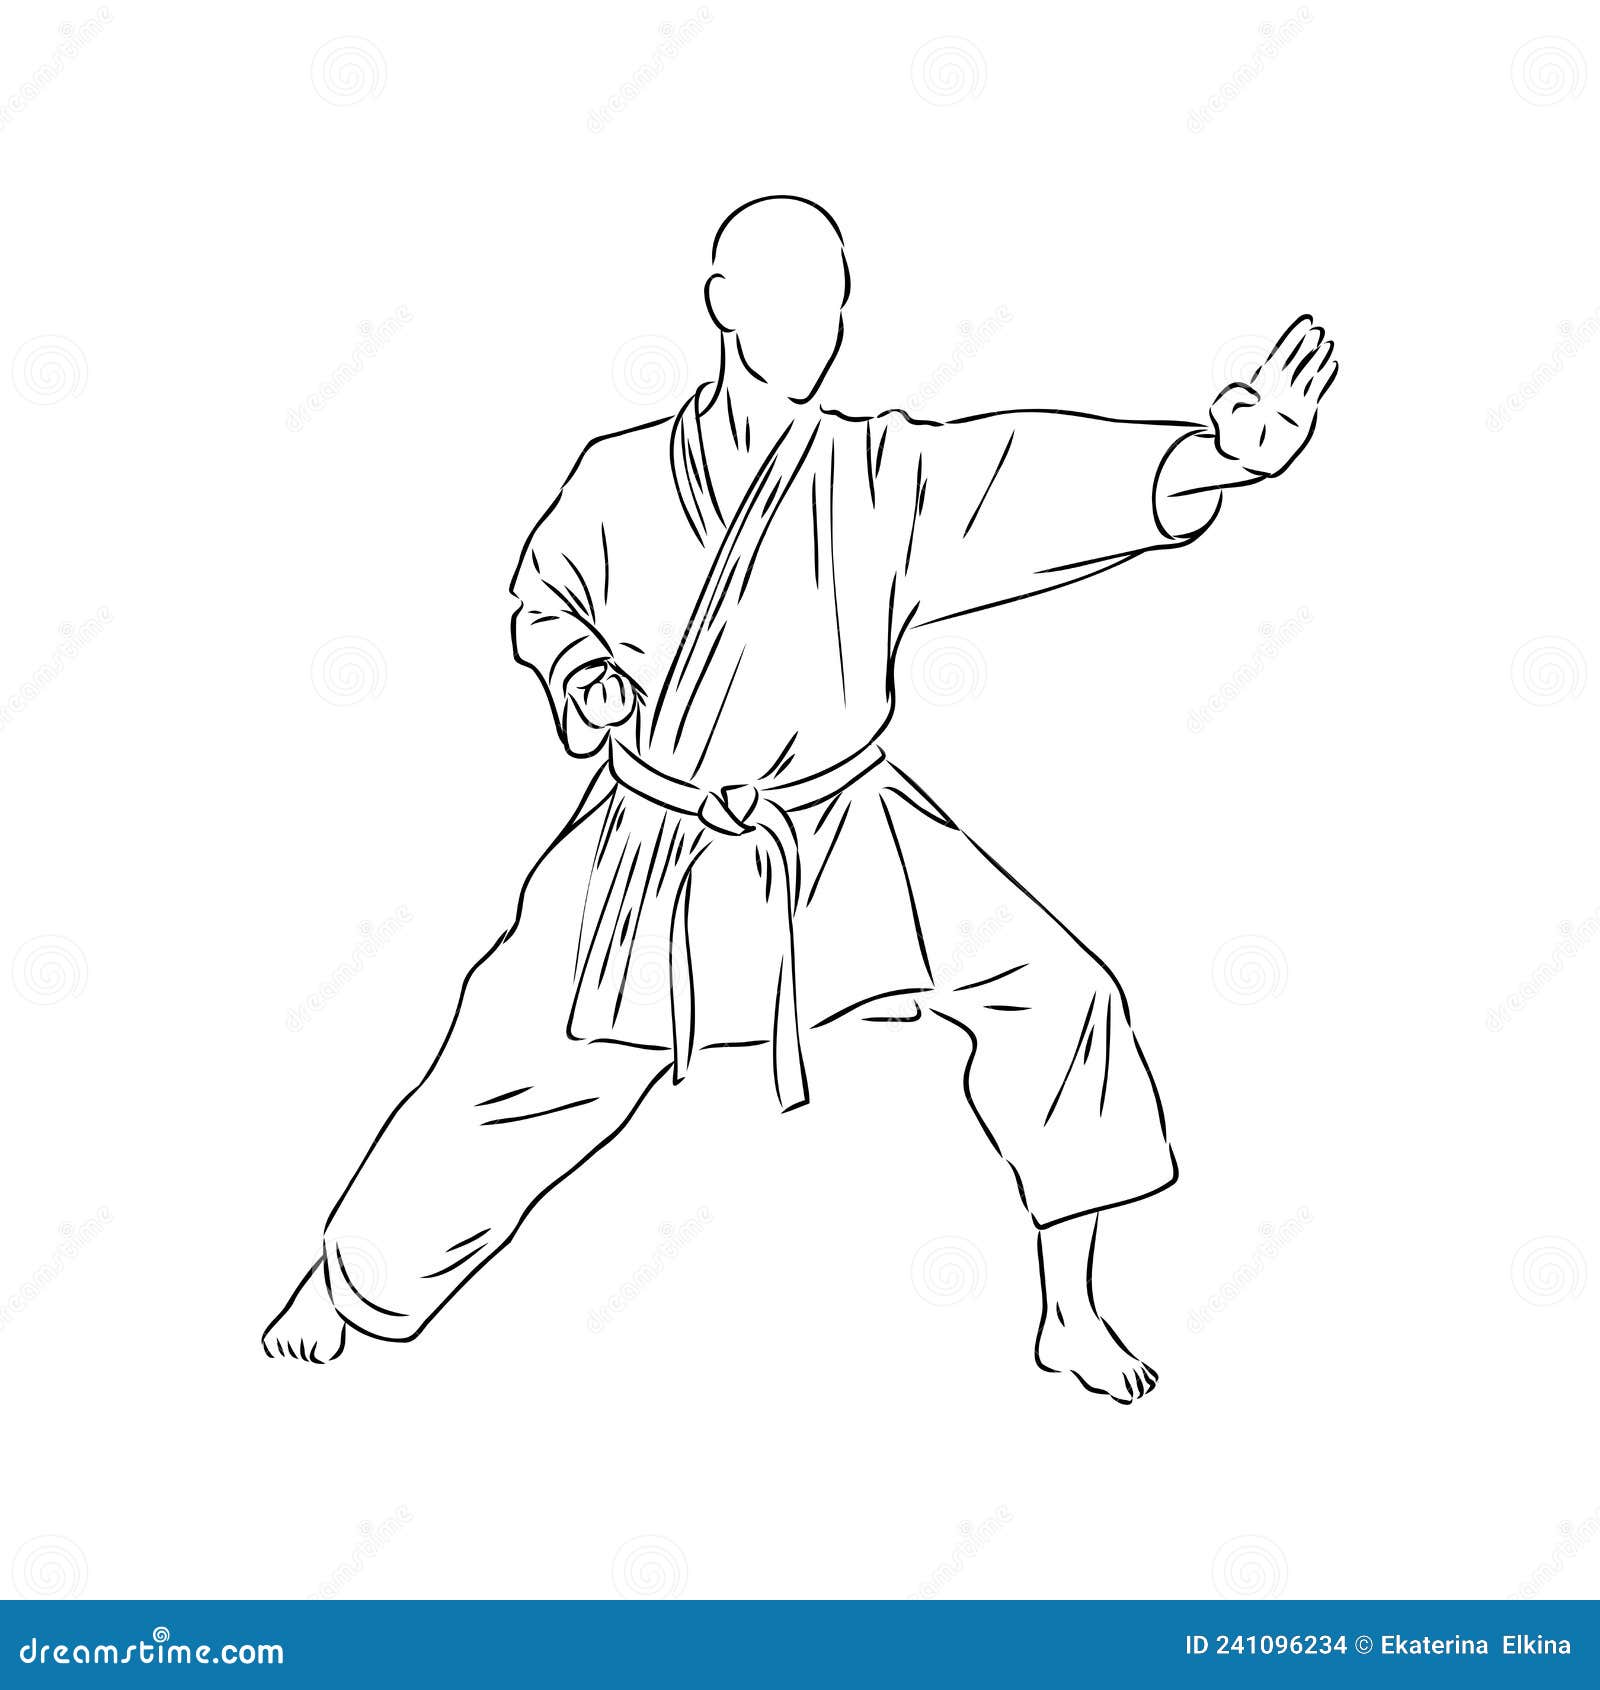 Karate Kick Technique Sketch Illustration. Asian Martial Art Sport Hand ...